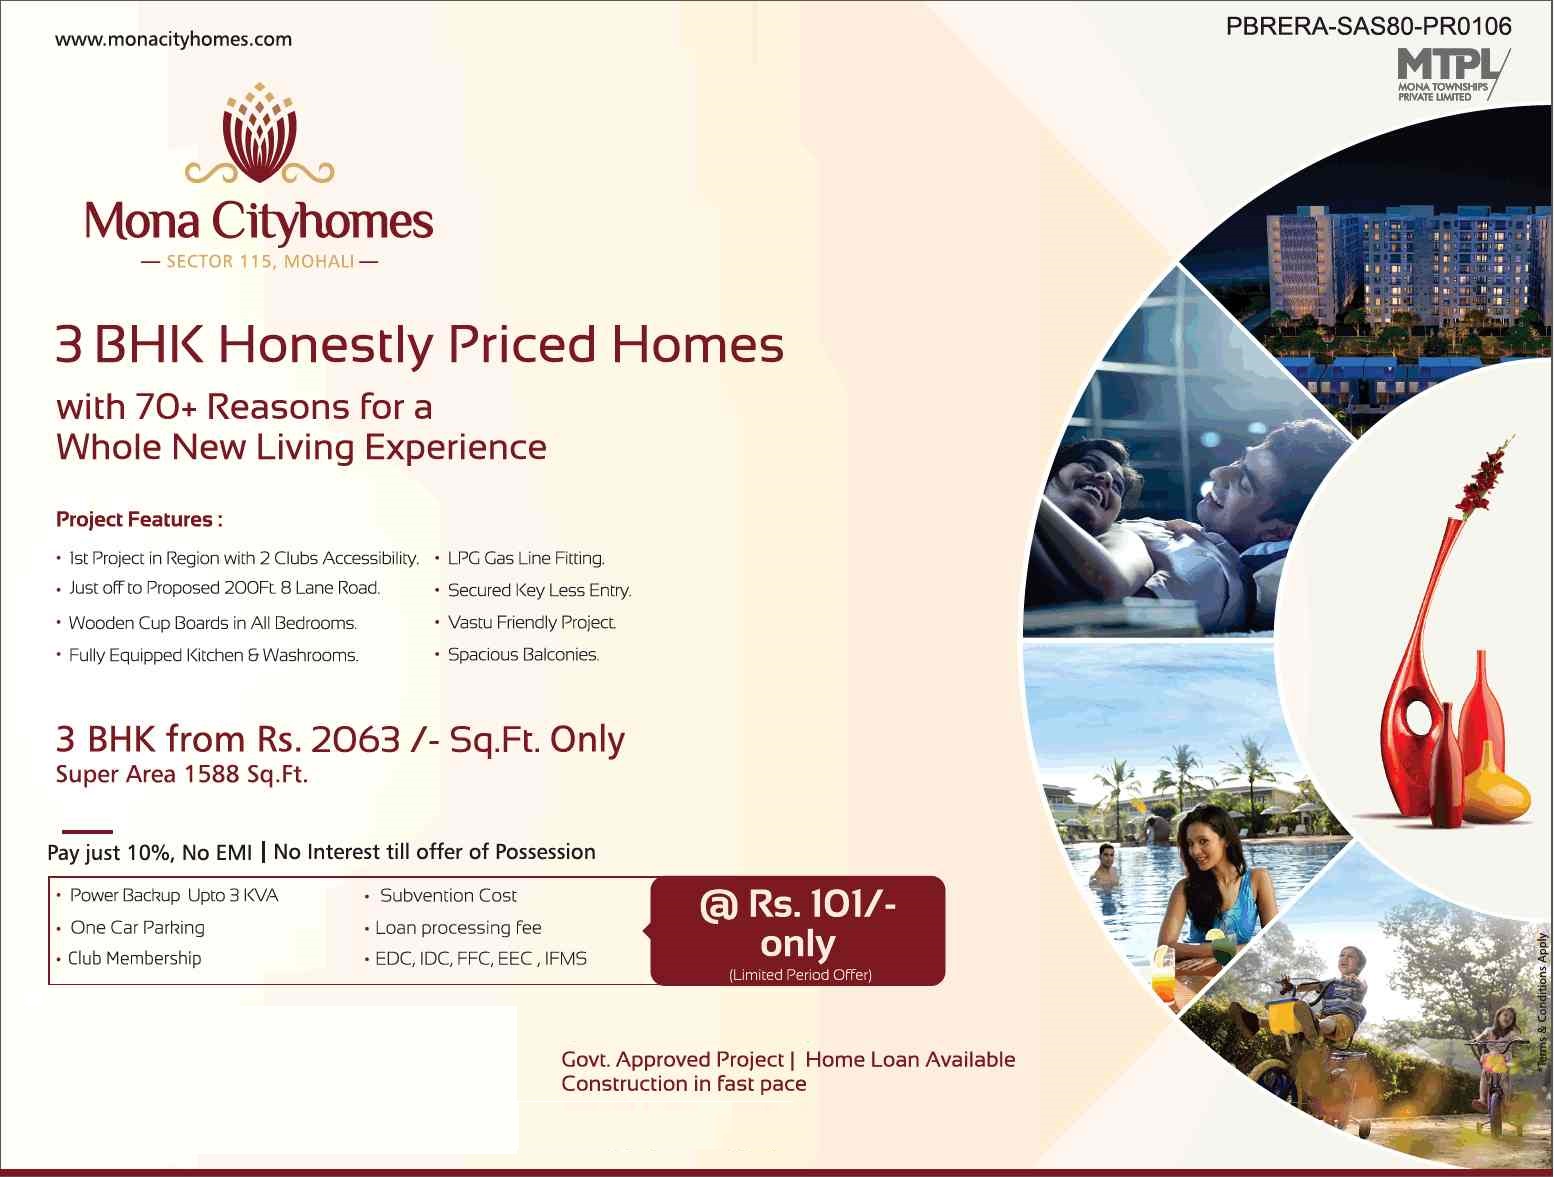 3 BHK Honestly Priced Homes at Mona Cityhomes, Mohali